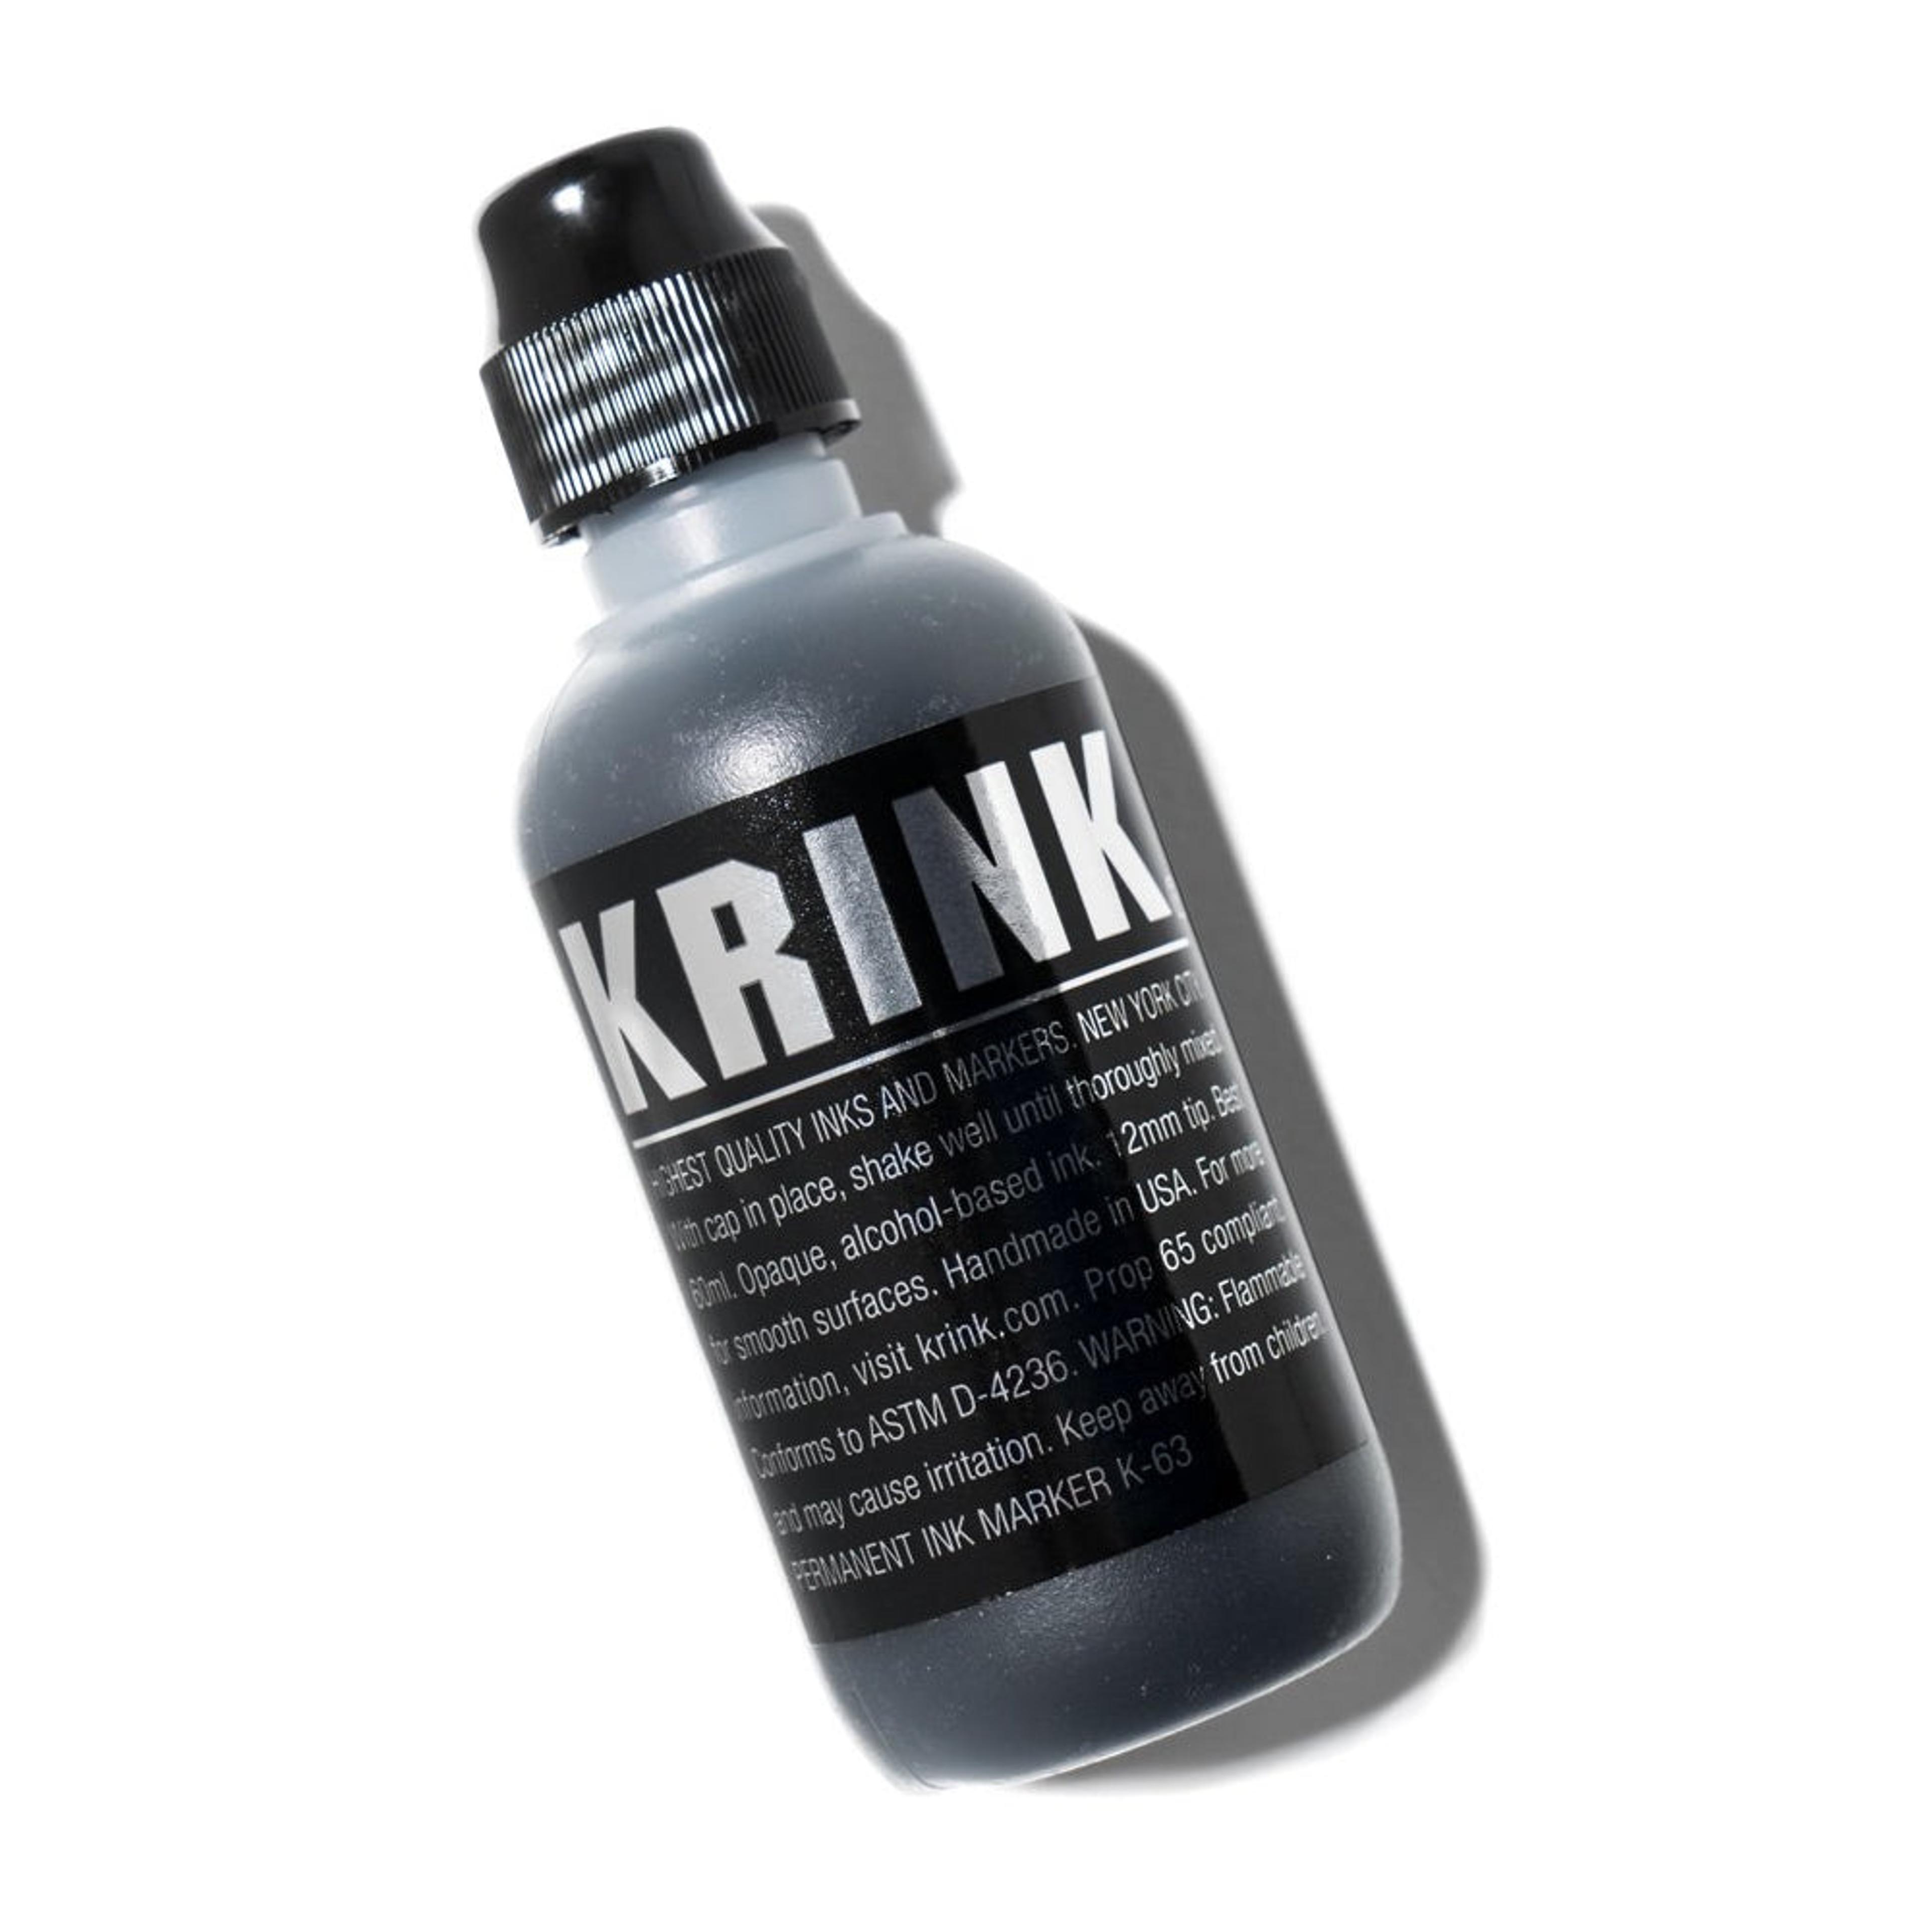 Krink K 60 Paint Marker Black